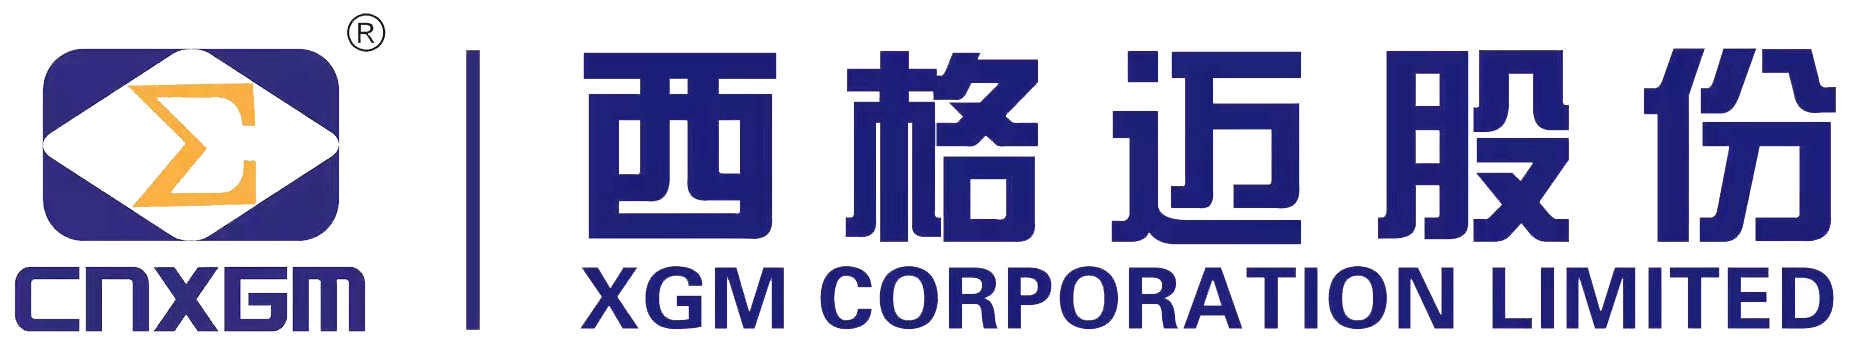 xgm corporation limited